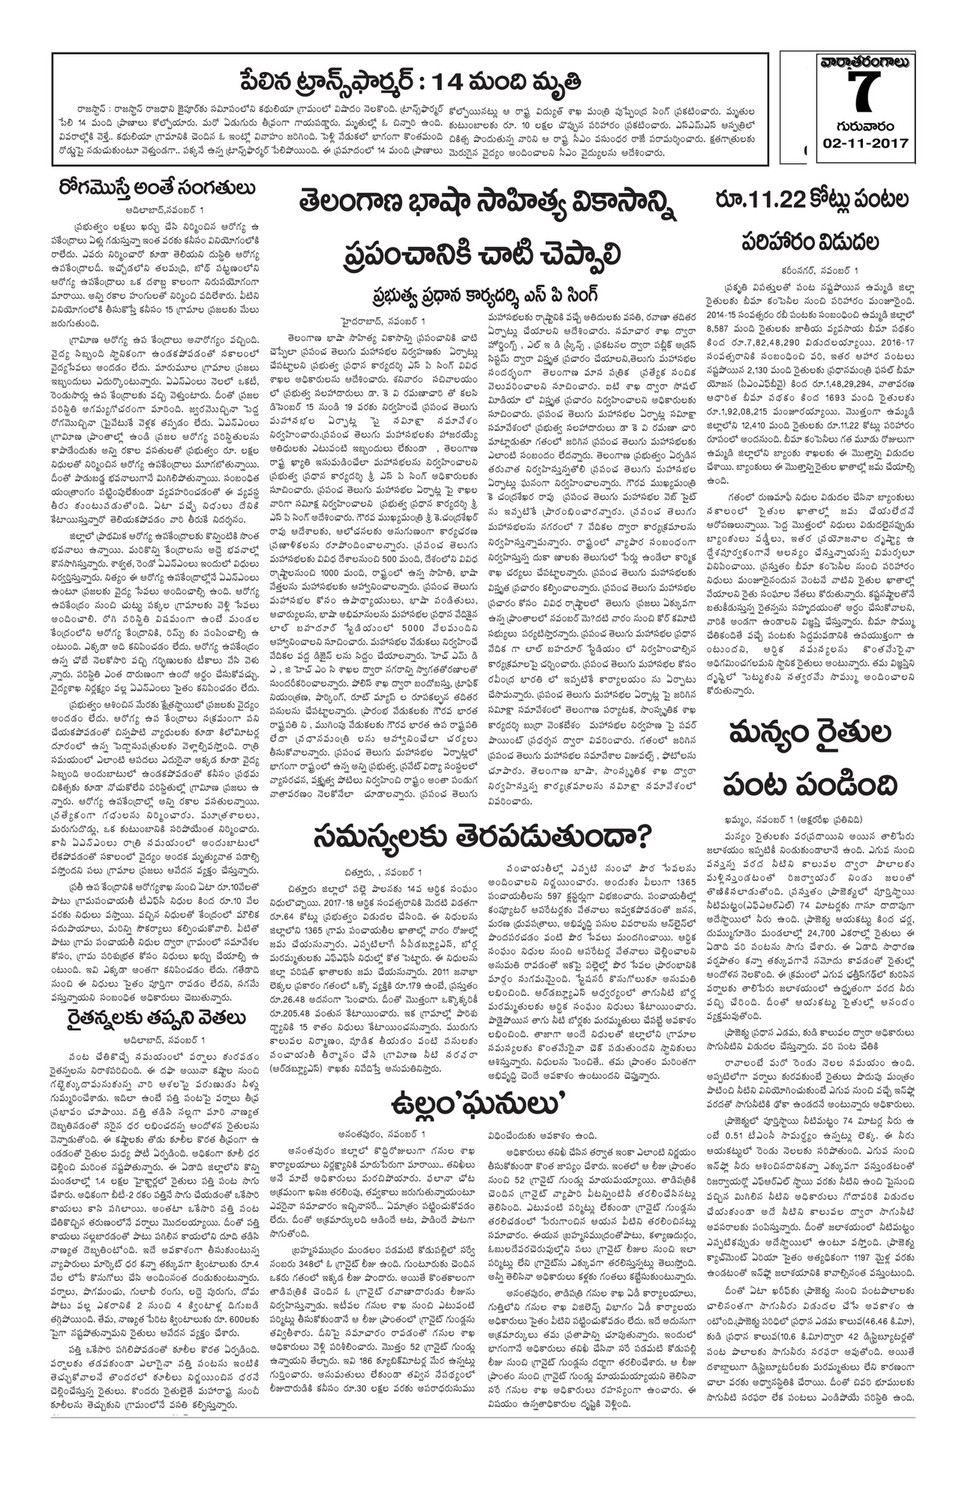 Saisankalpainfo 02 11 17 Vaarthatarangalu Hyd Full Page 8 Created With Publitas Com